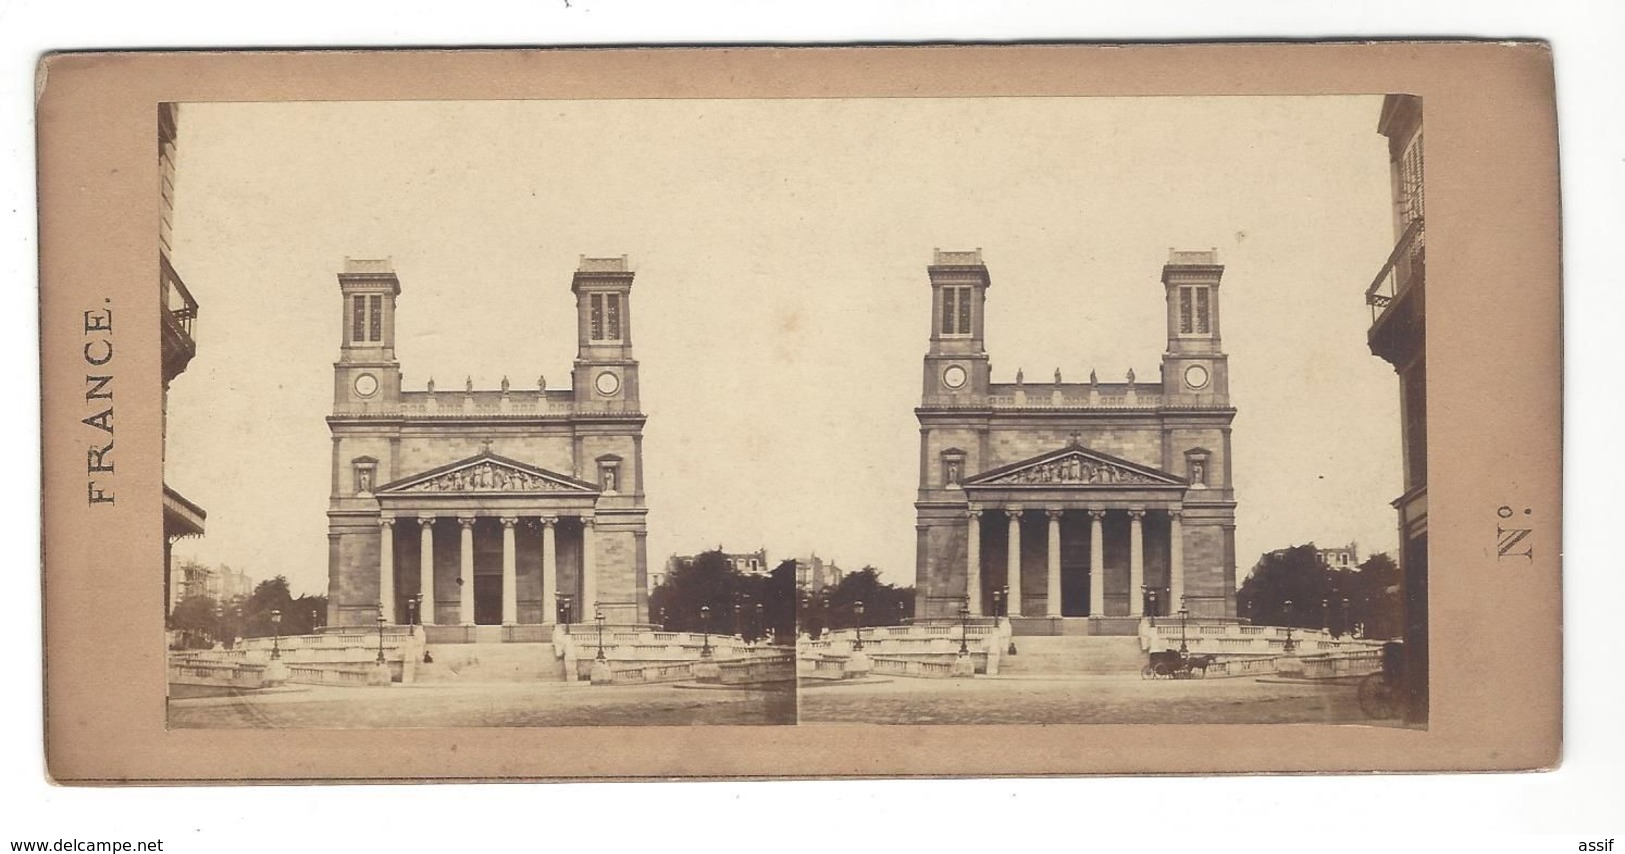 PARIS EGLISE ST VINCENT DE PAUL  PHOTO STEREO CIRCA 1860 /FREE SHIPPING R - Stereo-Photographie